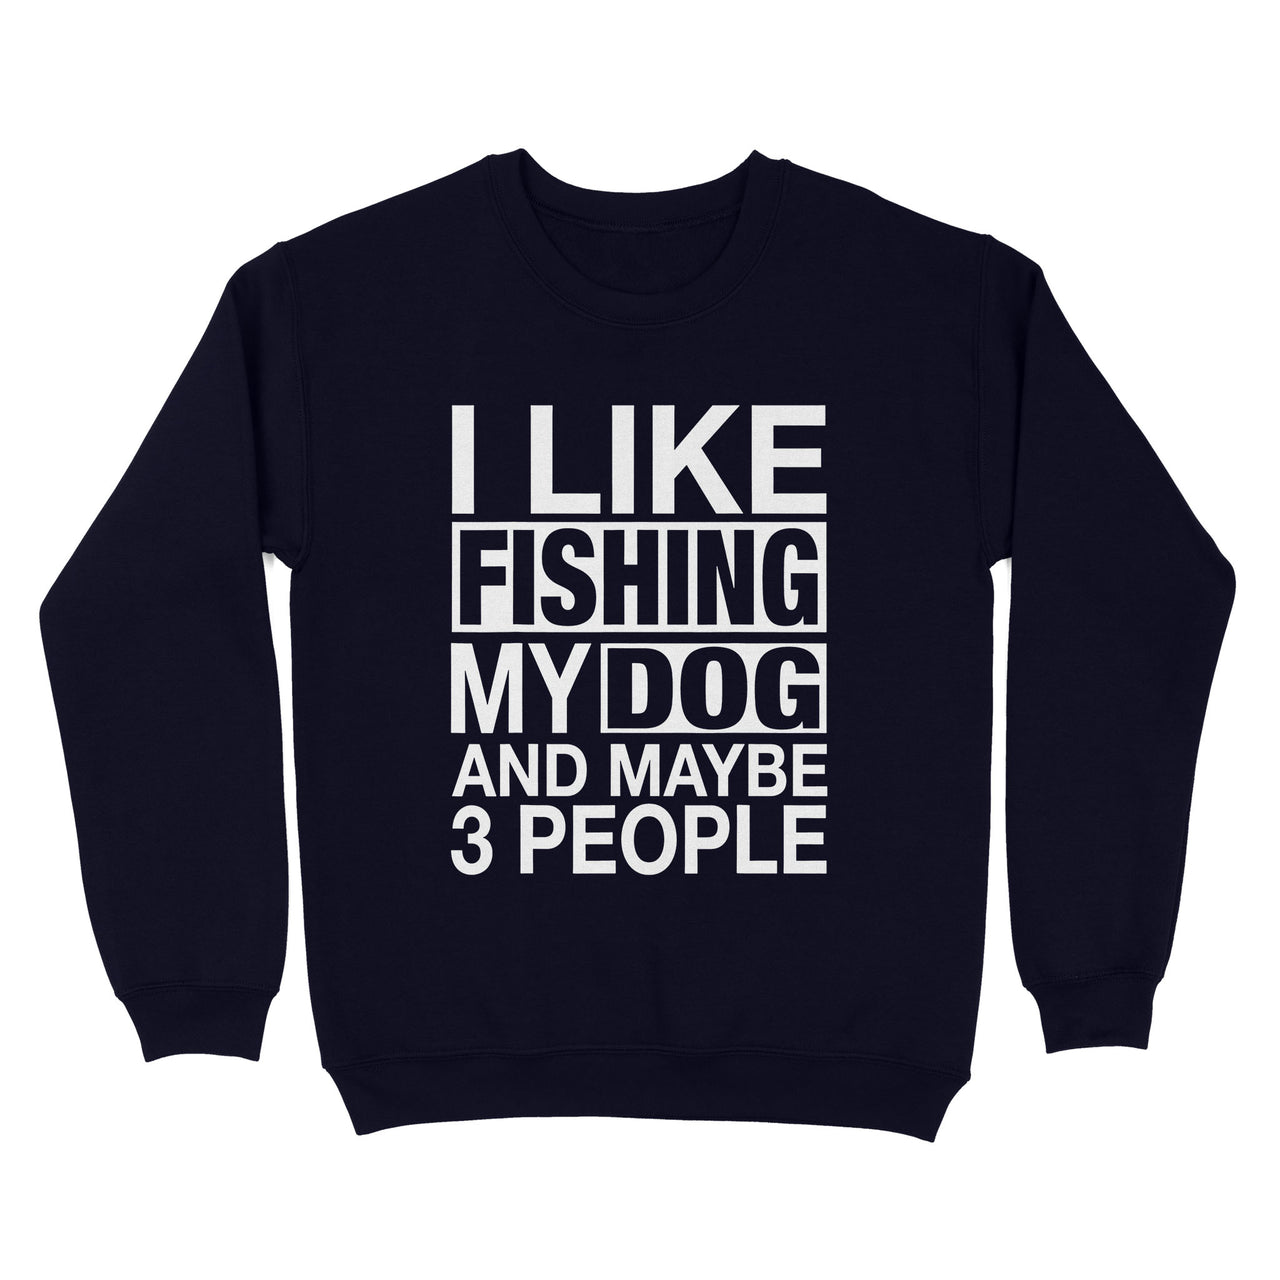 Gift Idea For Dog Lover - I Like Fishing My Fog Maybe 3 People - Standard Crew Neck Sweatshirt